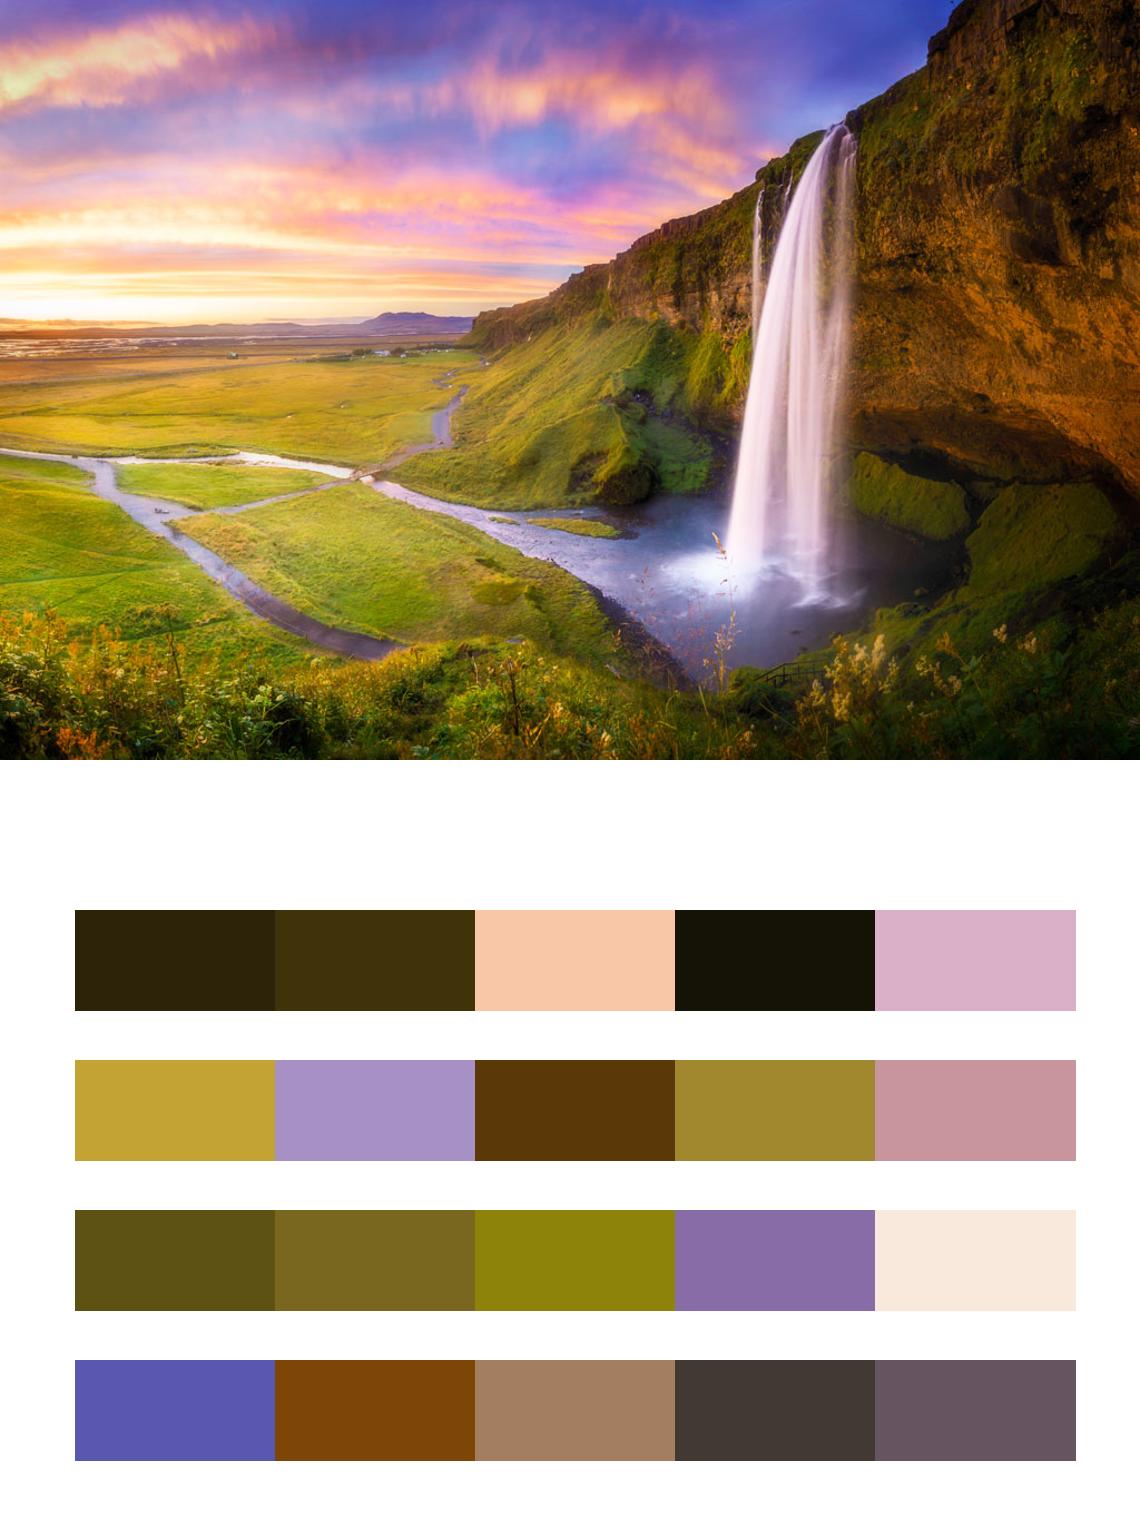 Исландский водопад Сельяландфосс на закате цвета